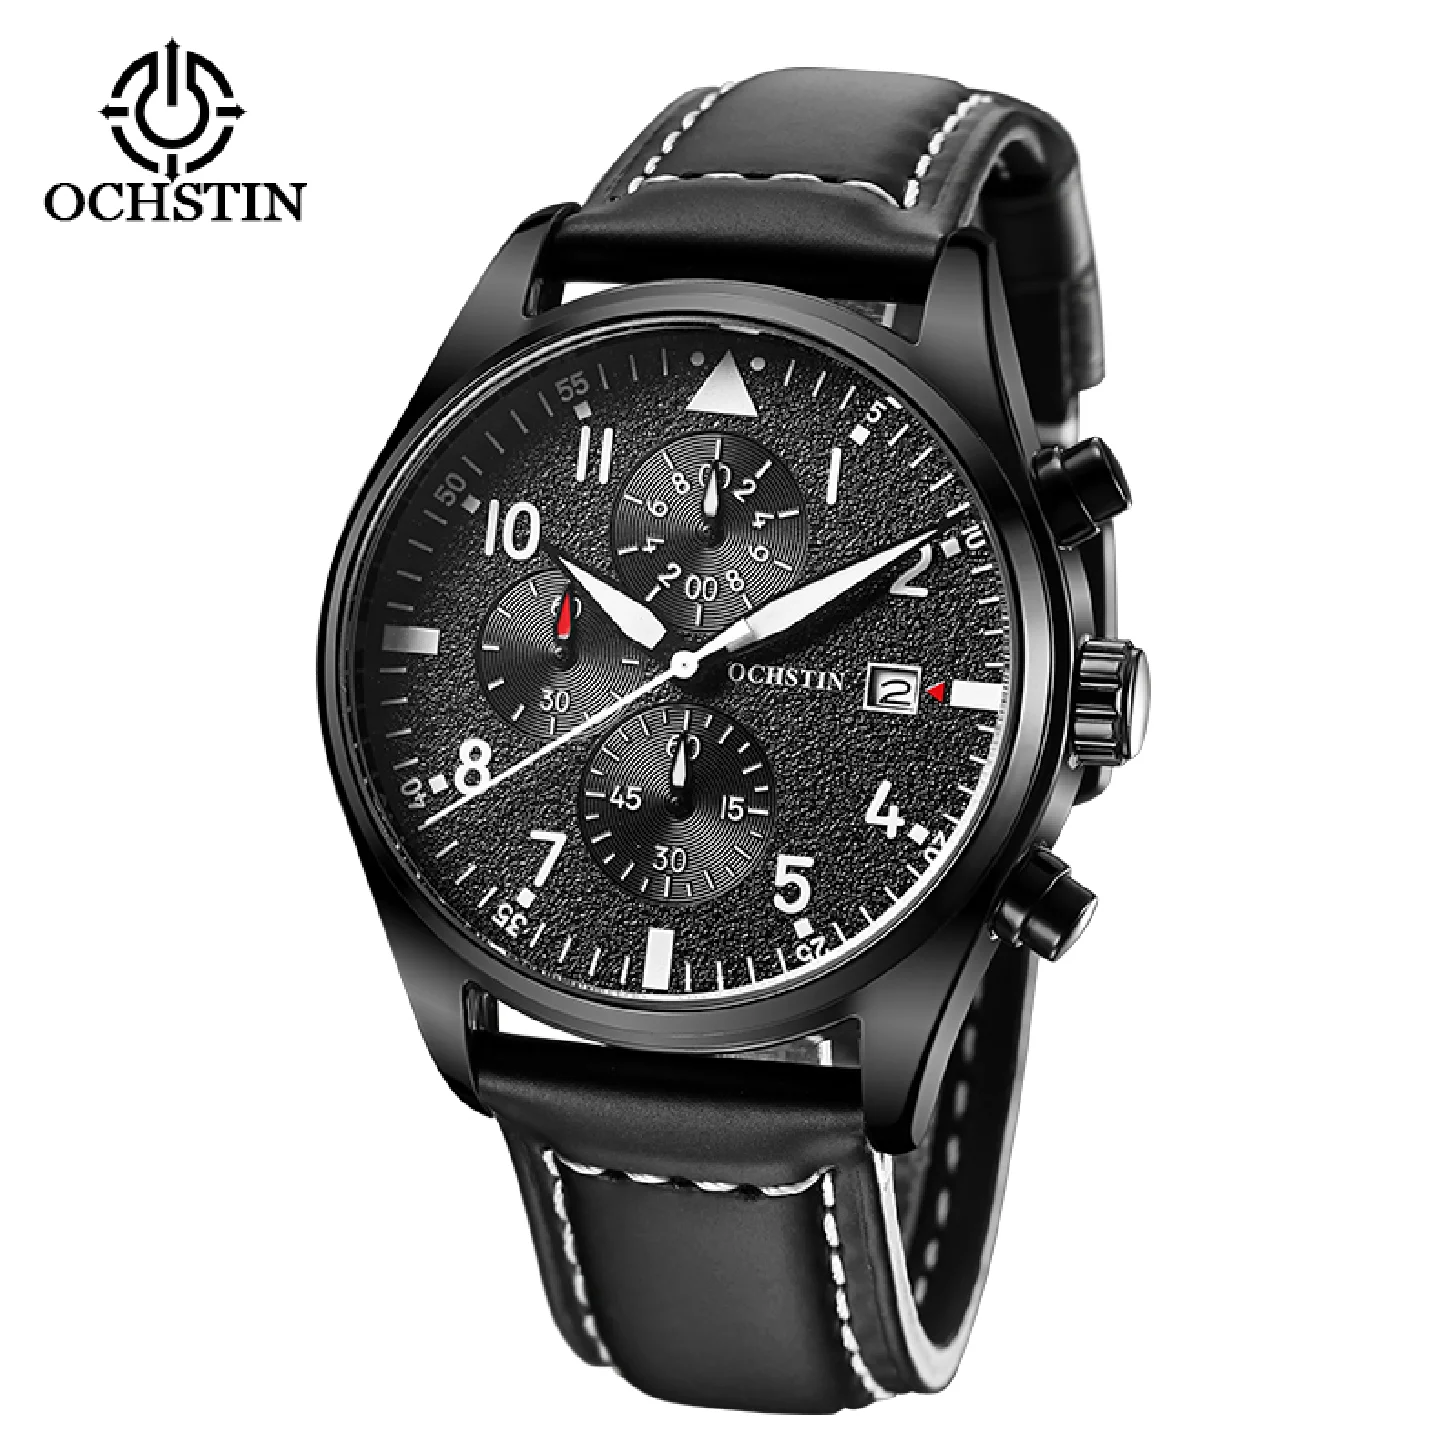 

OCHSTIN 2020 Top Luxury Brand Men Watches Fashion Chronograph Waterproof Quartz Analog Wristwatch Male Clock Relogio Masculino